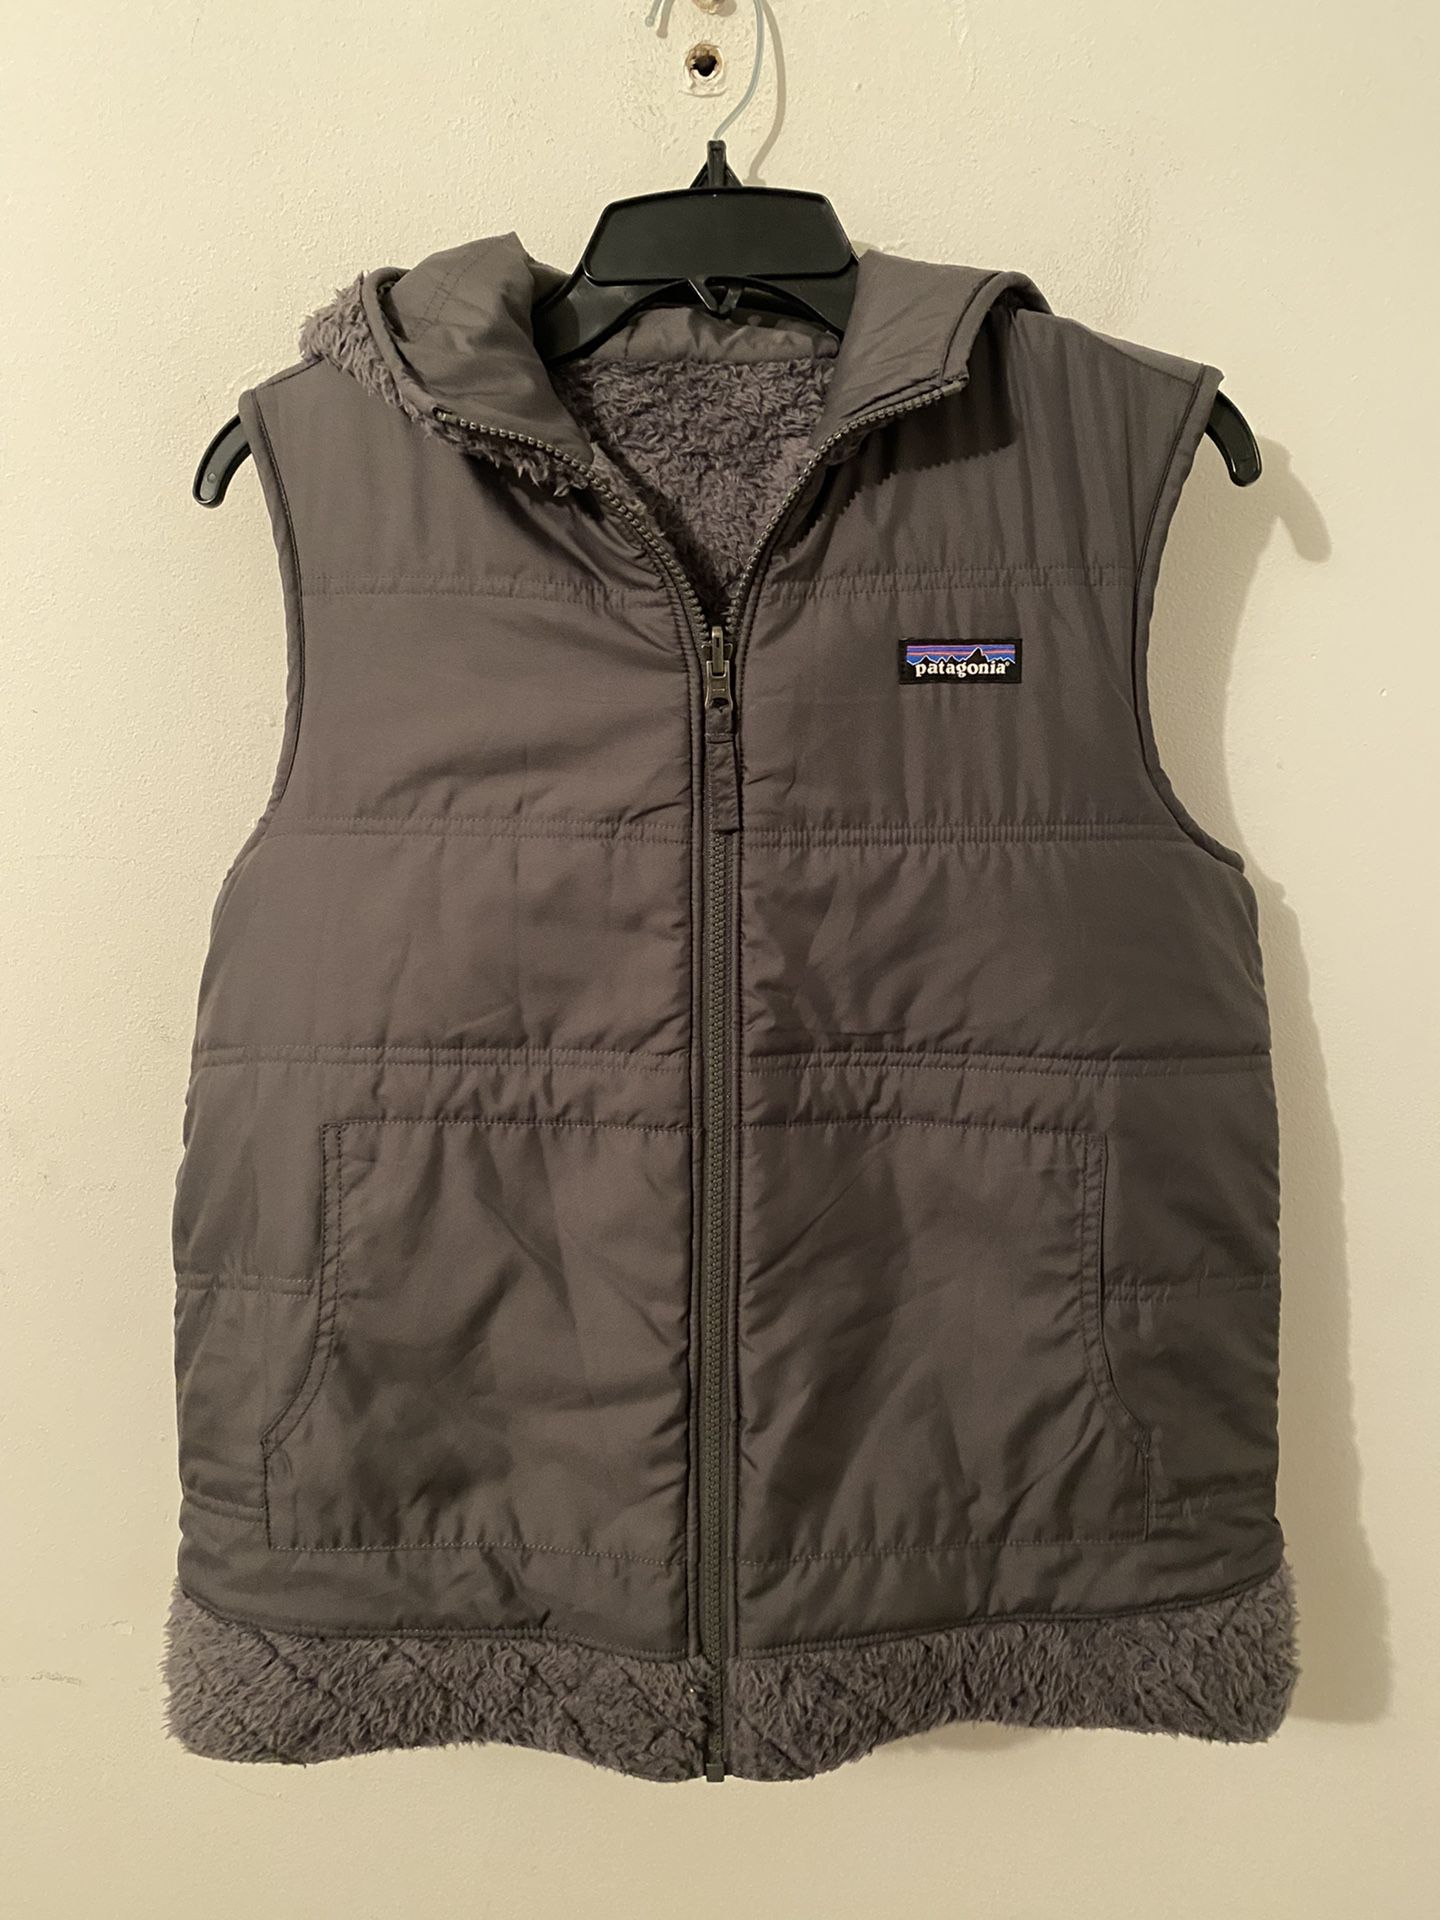 Patagonia Reversible Vest Women’s Medium (Used)